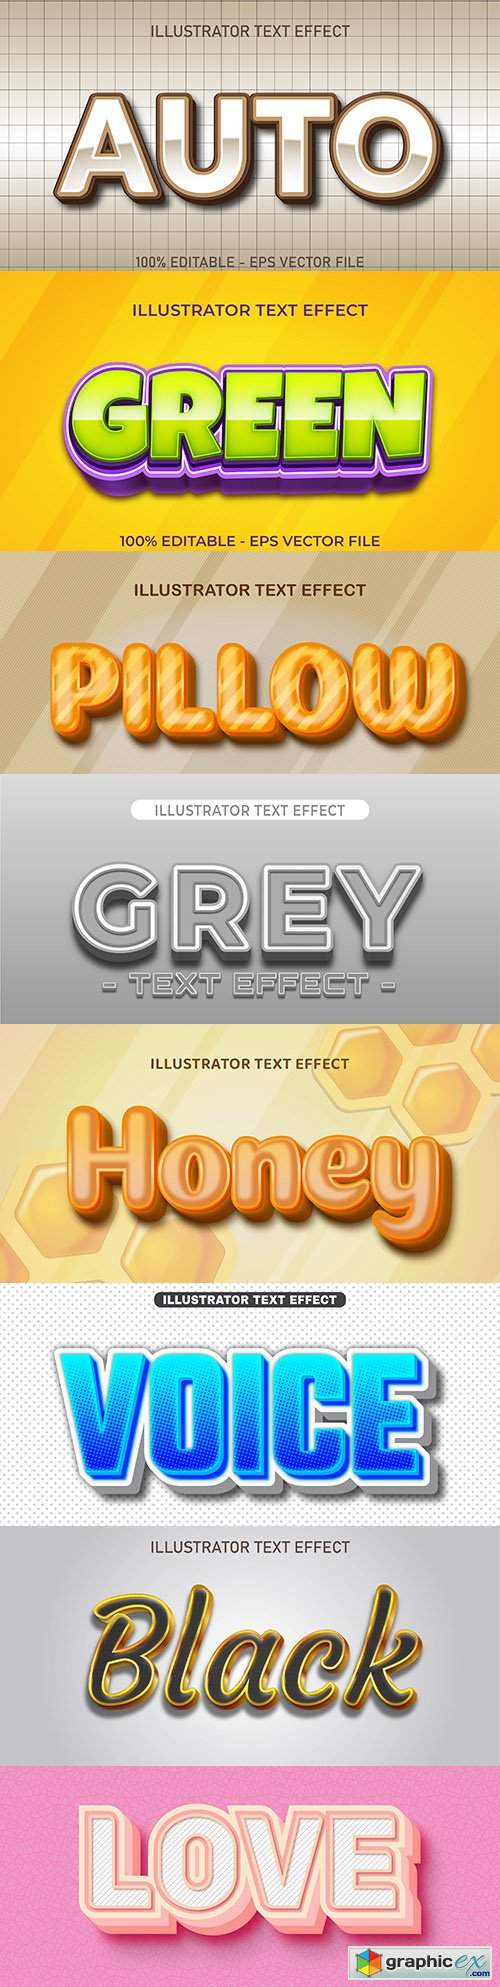  Editable font effect text collection illustration design 195 